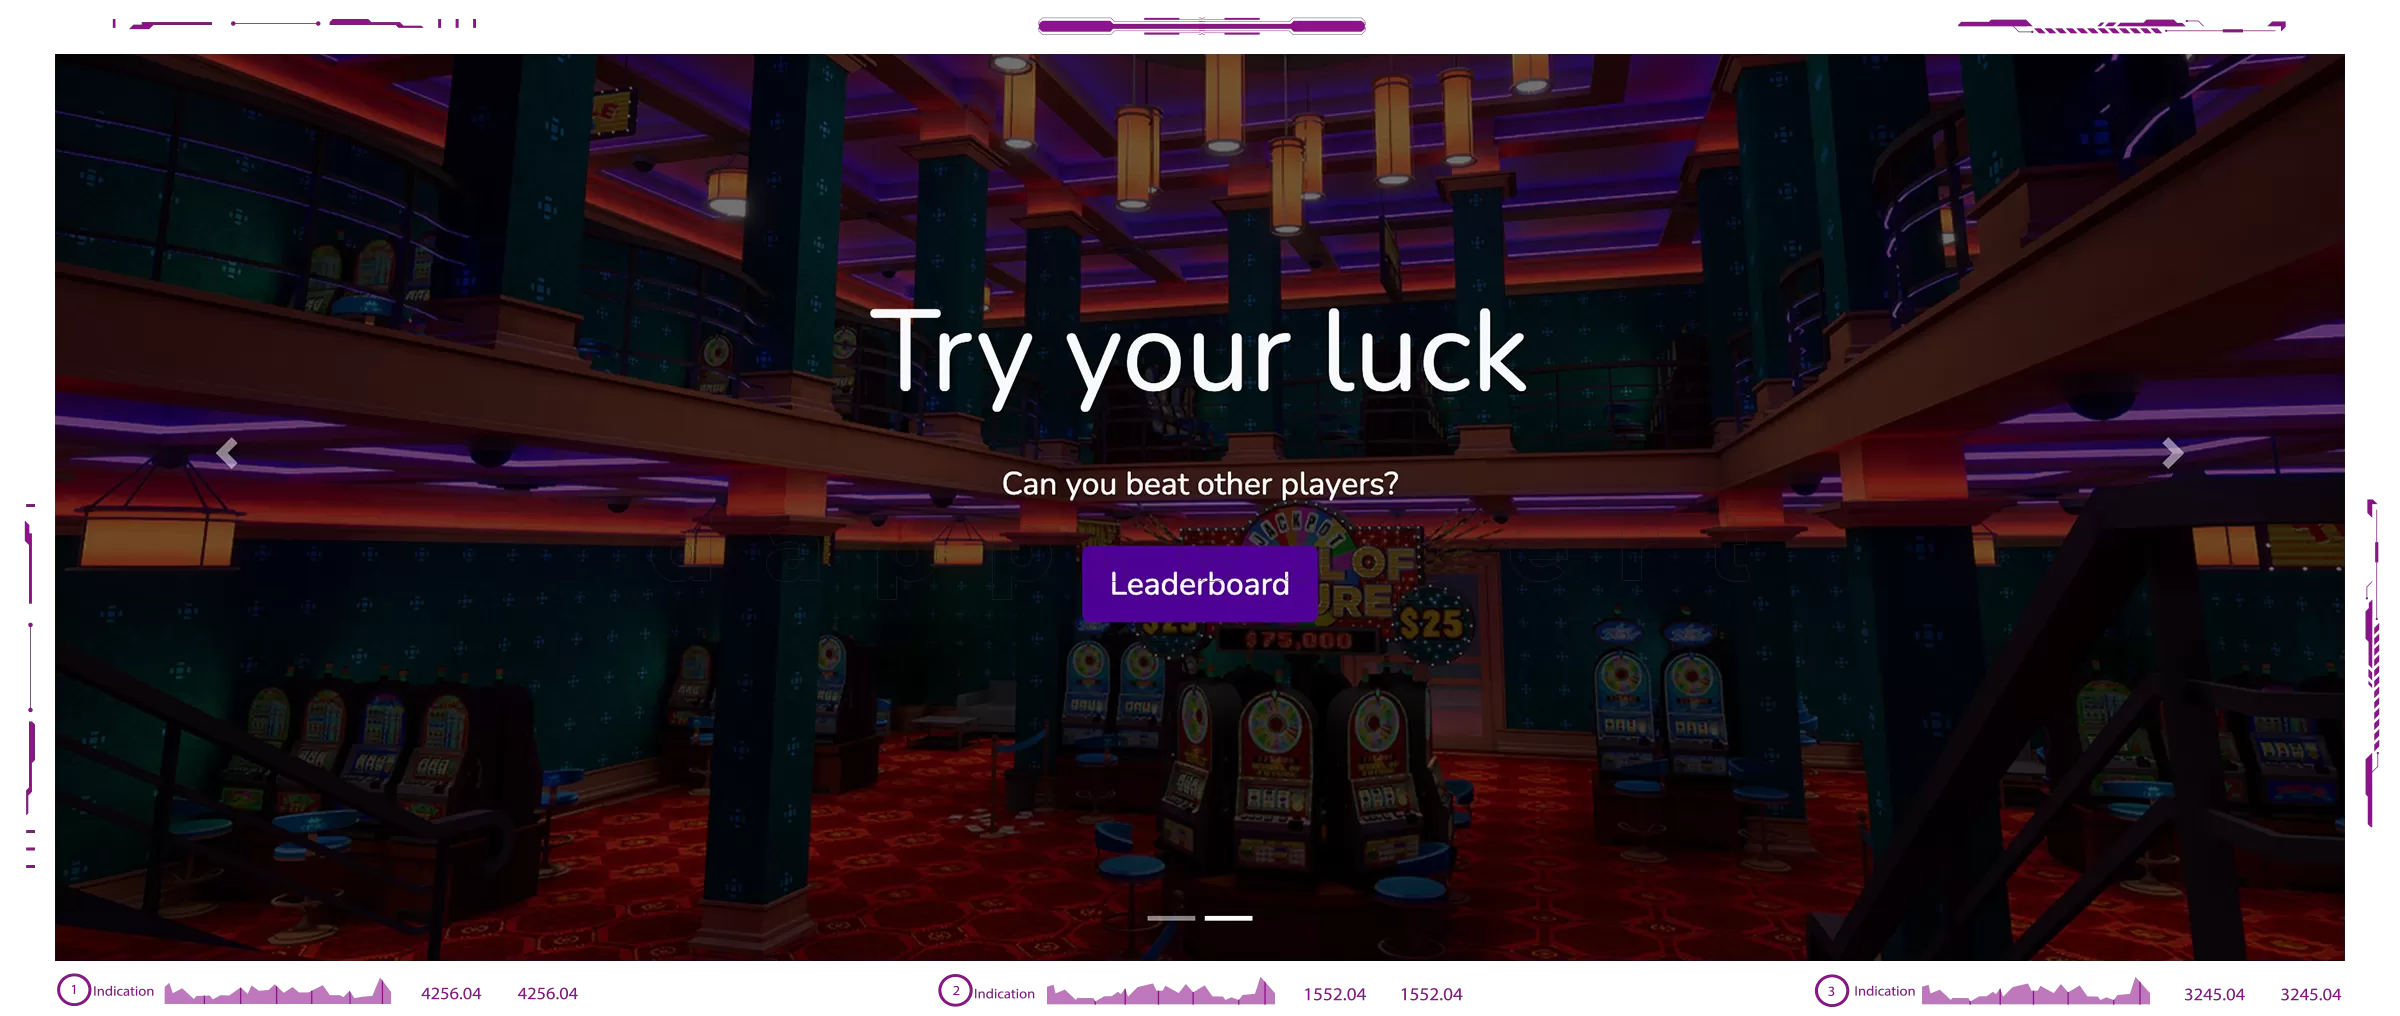 Casino Poker Lucky Wheel Keno Bingo Heads or Tails dapps